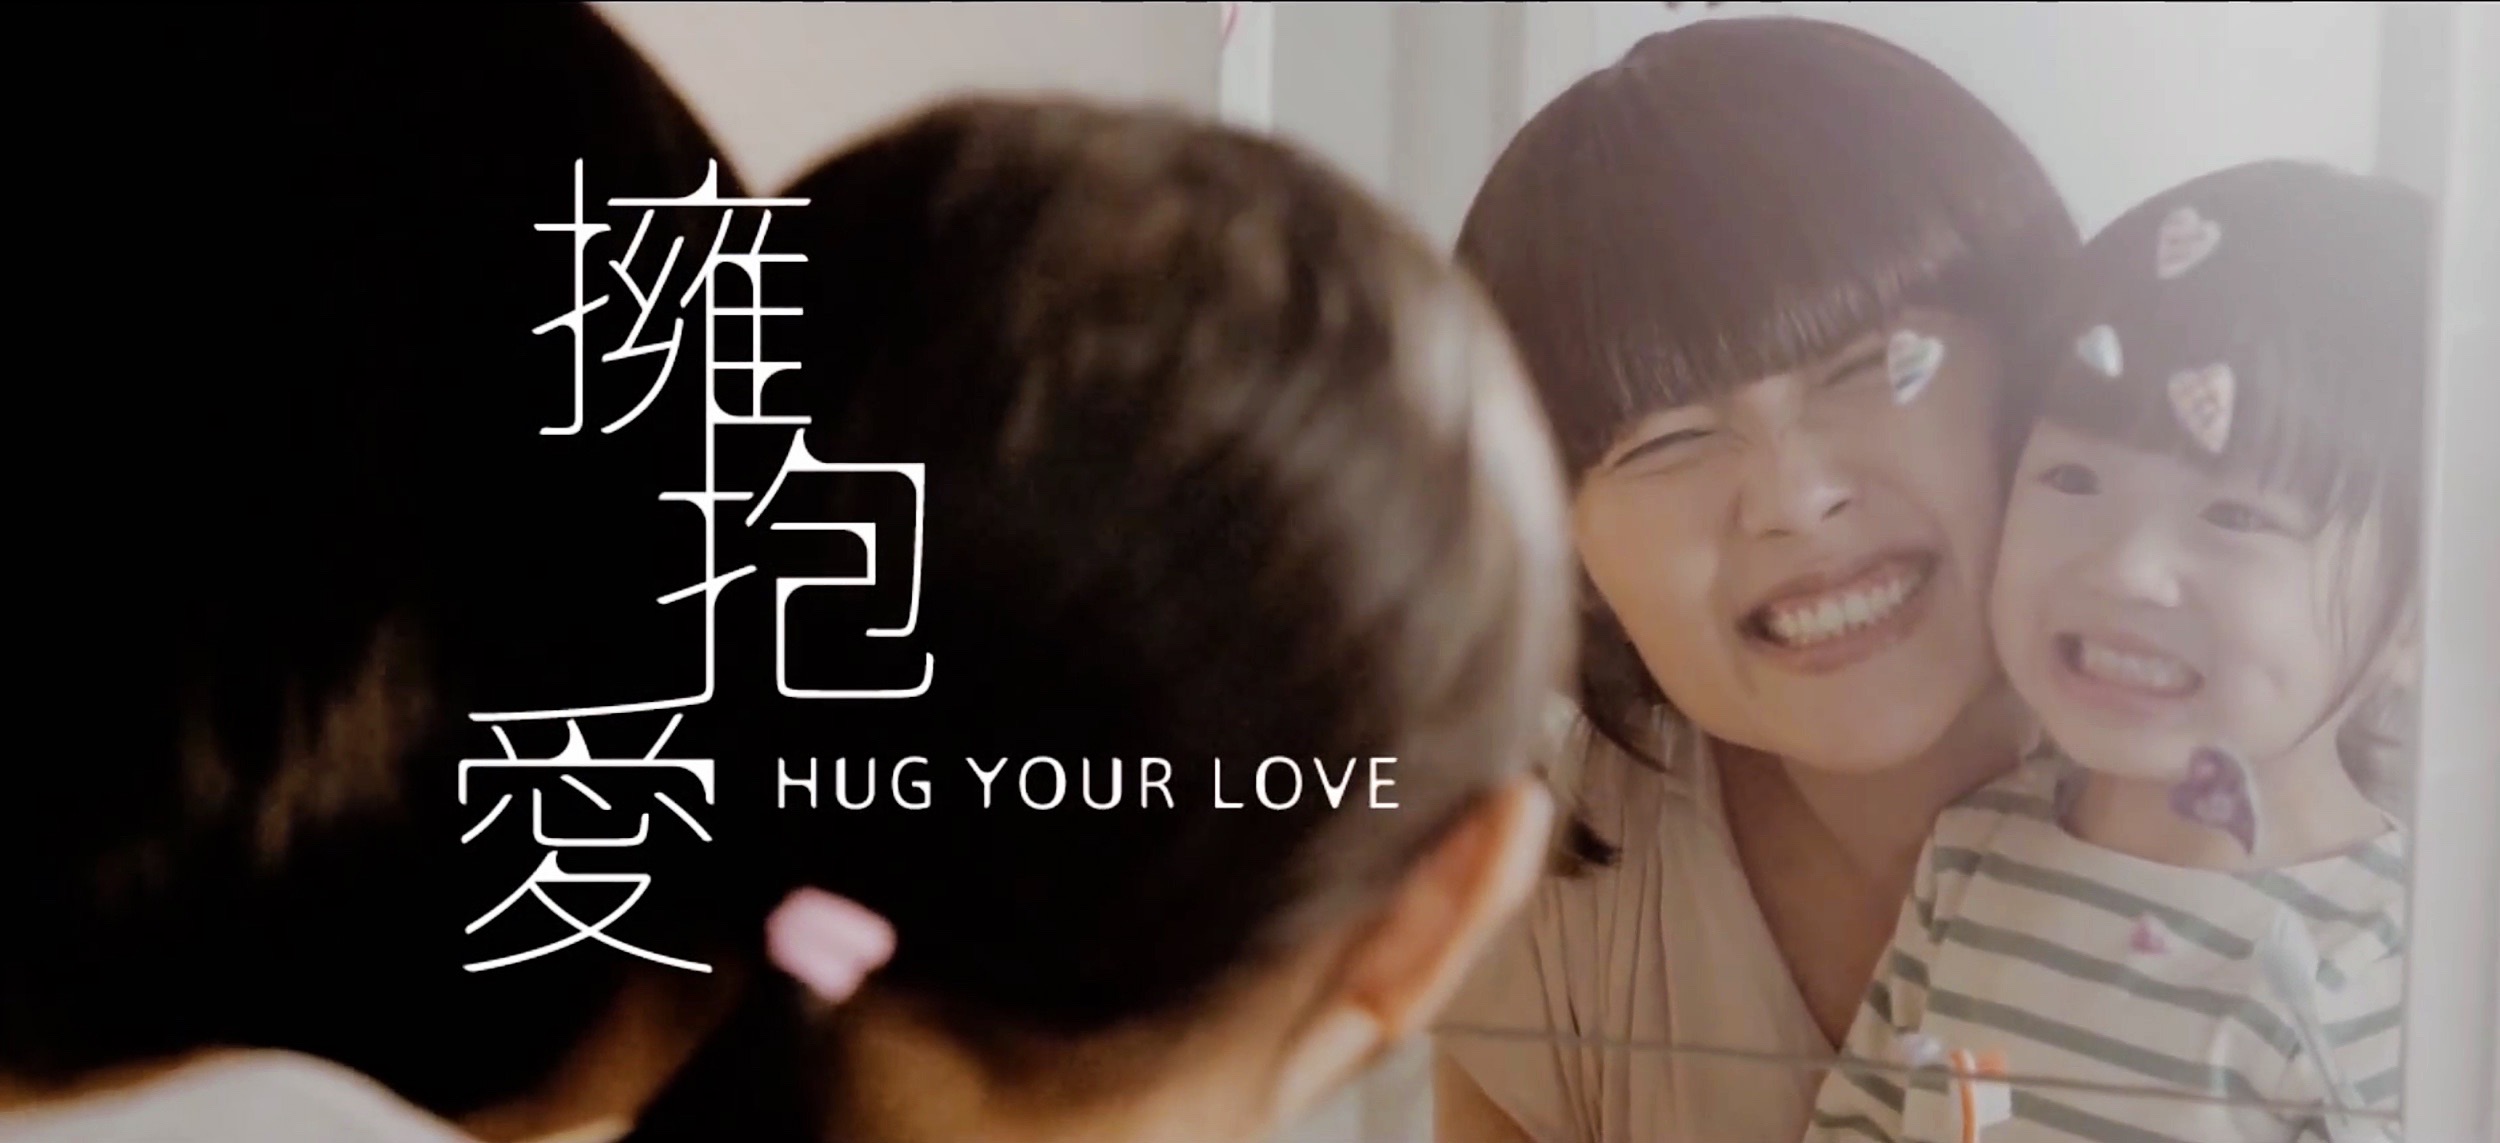 Satami Hug Your Love Typog